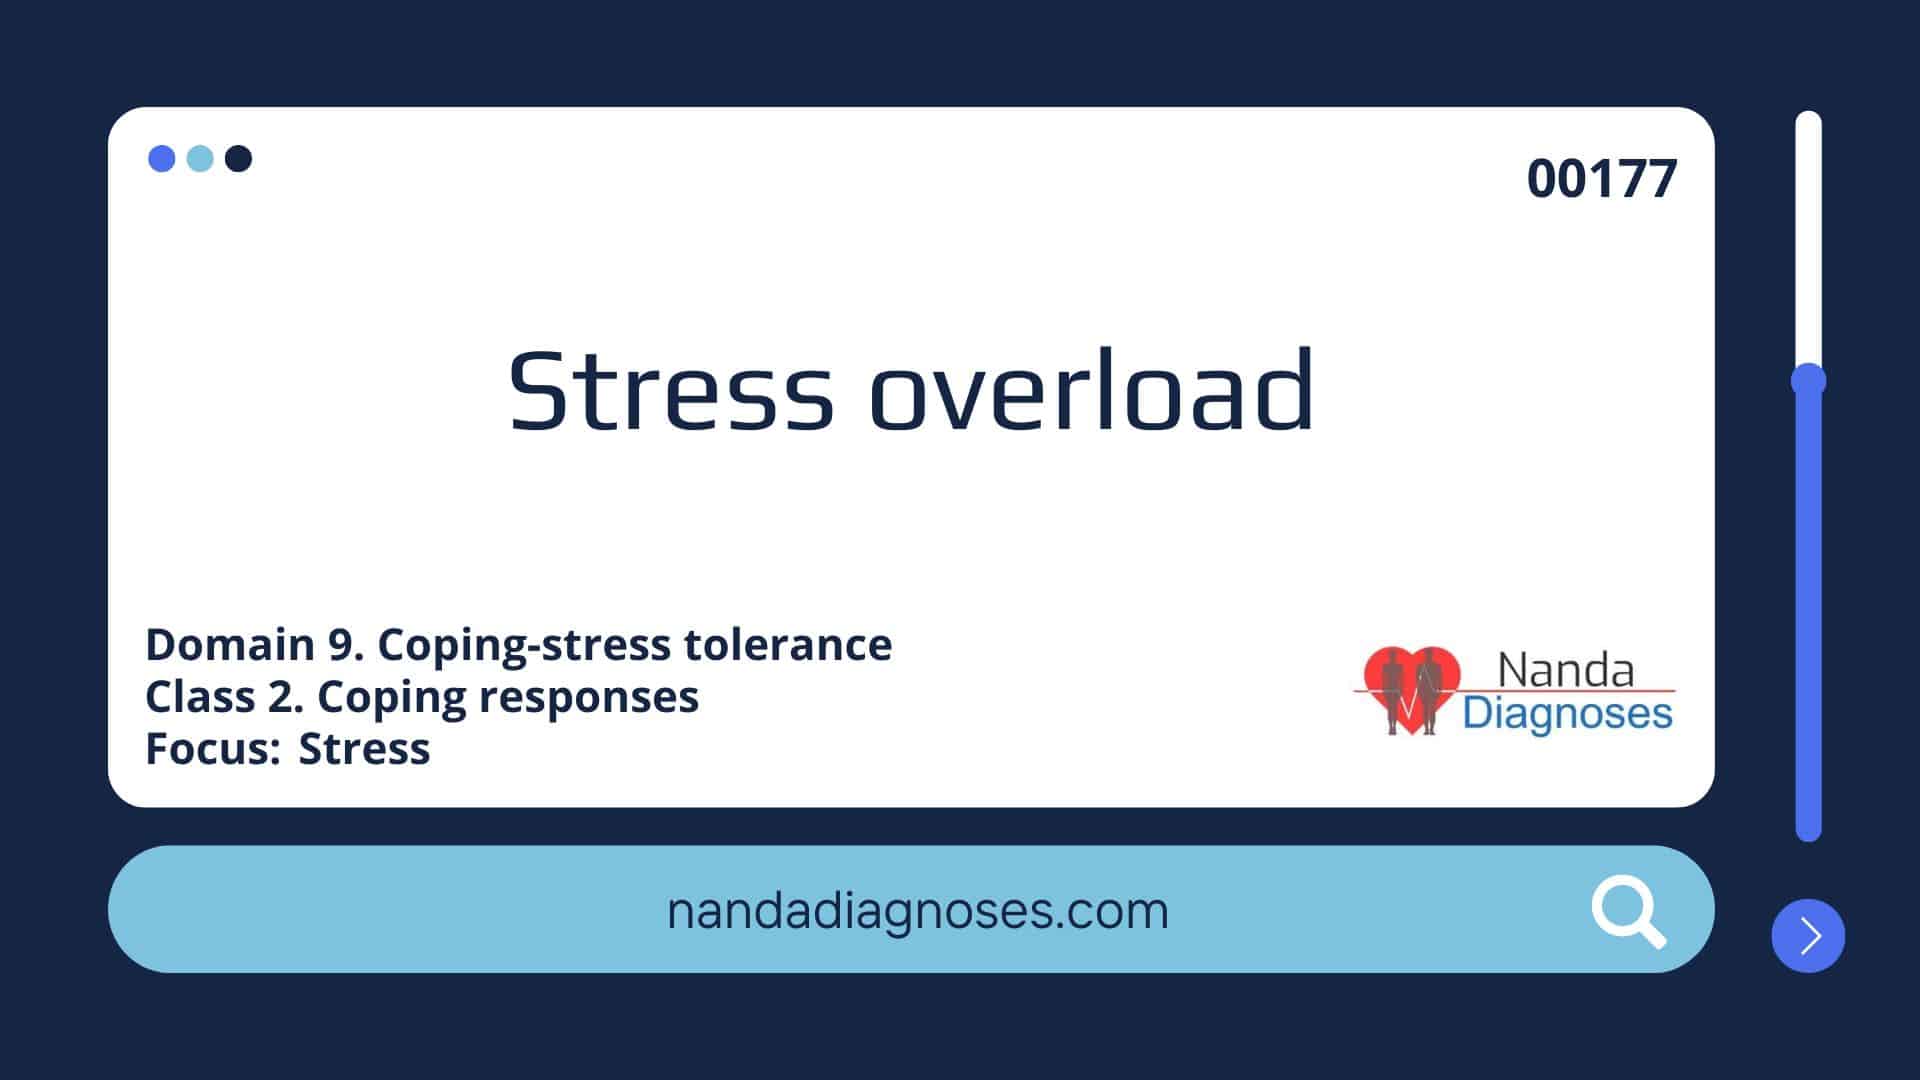 Stress overload